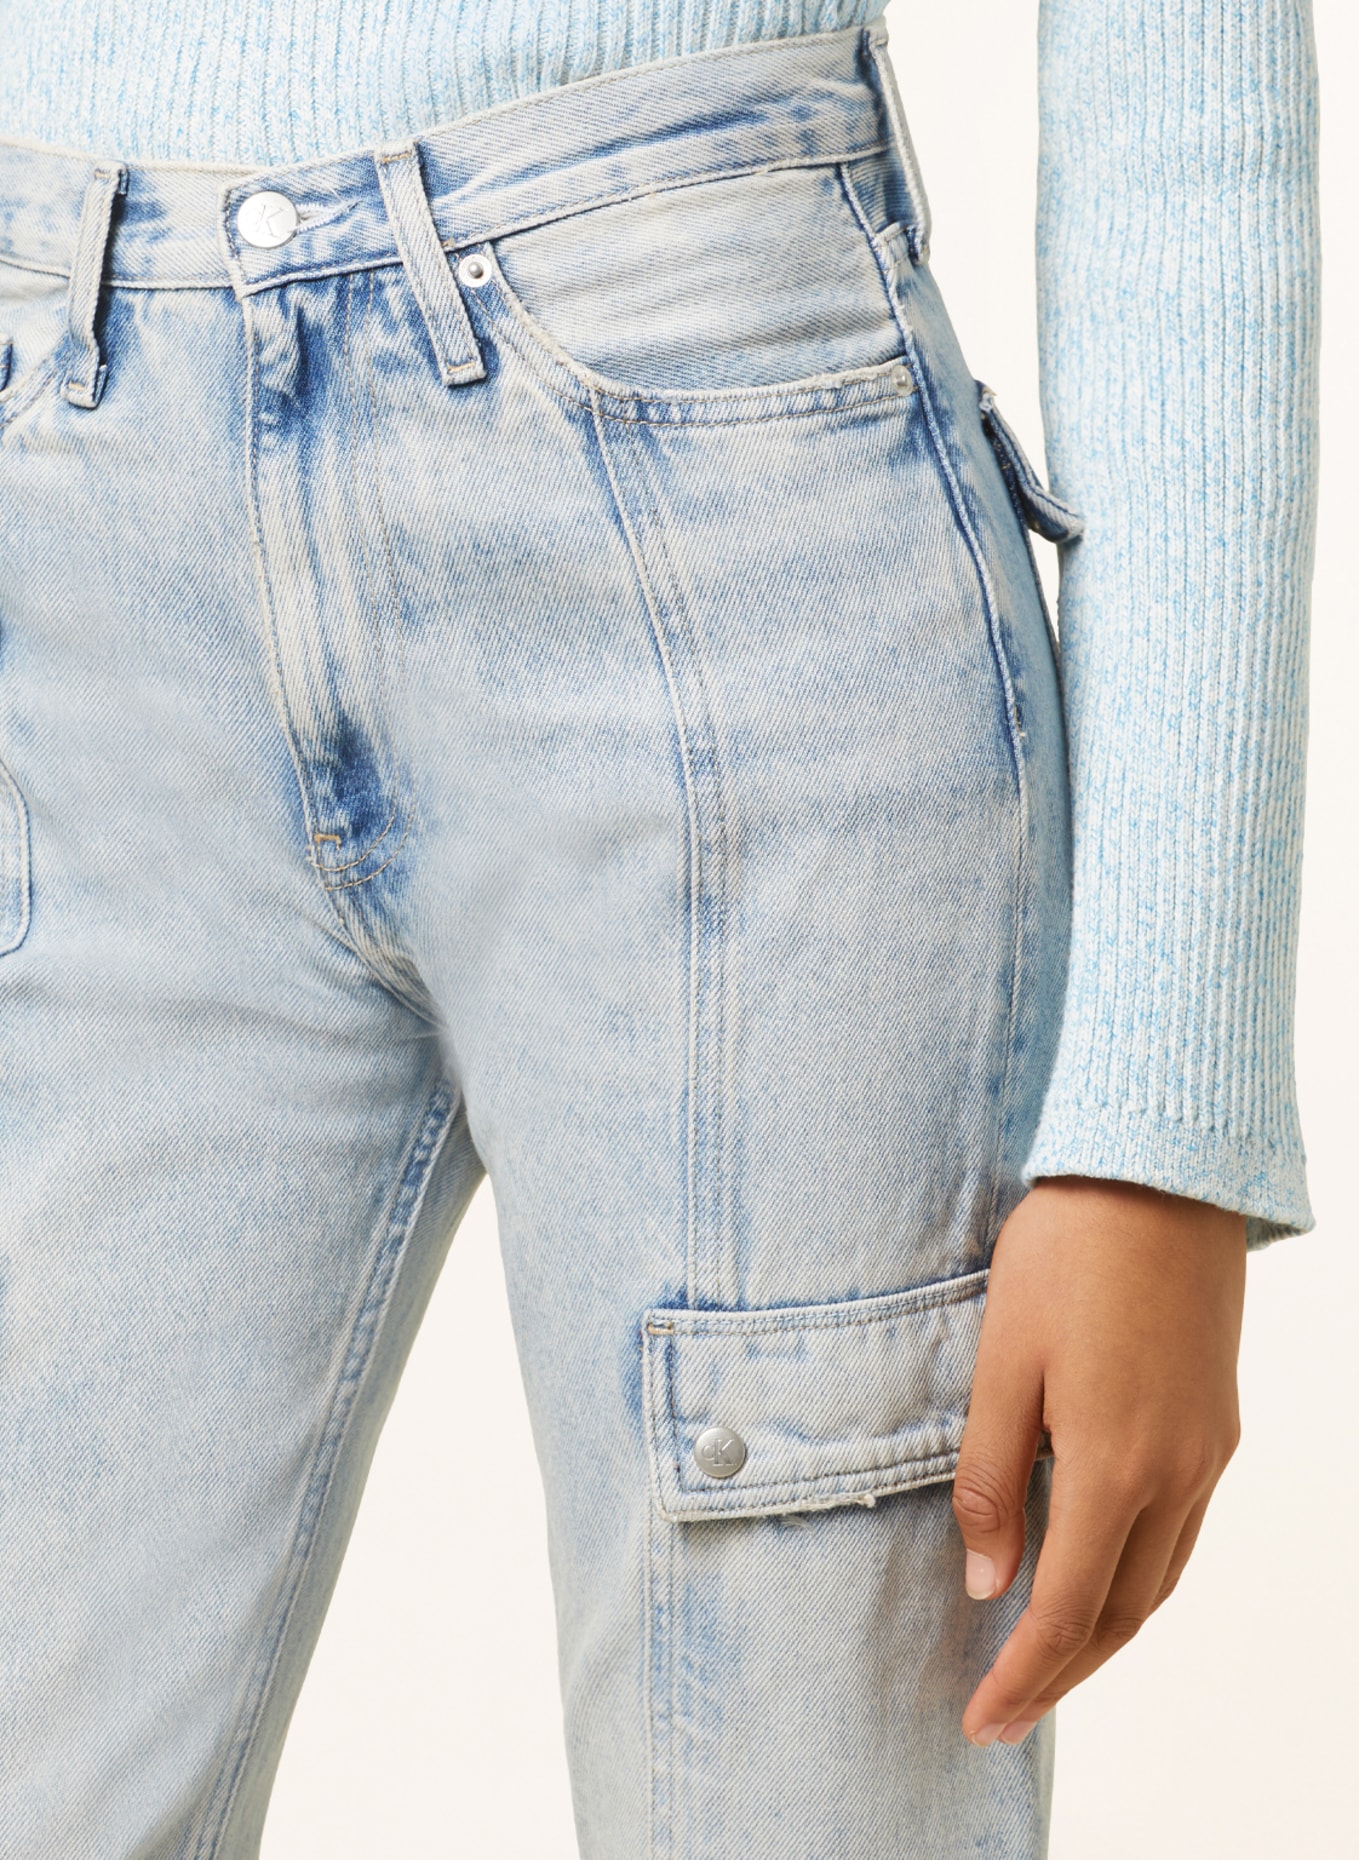 Calvin Klein Jeans in Cargojeans light denim 1aa